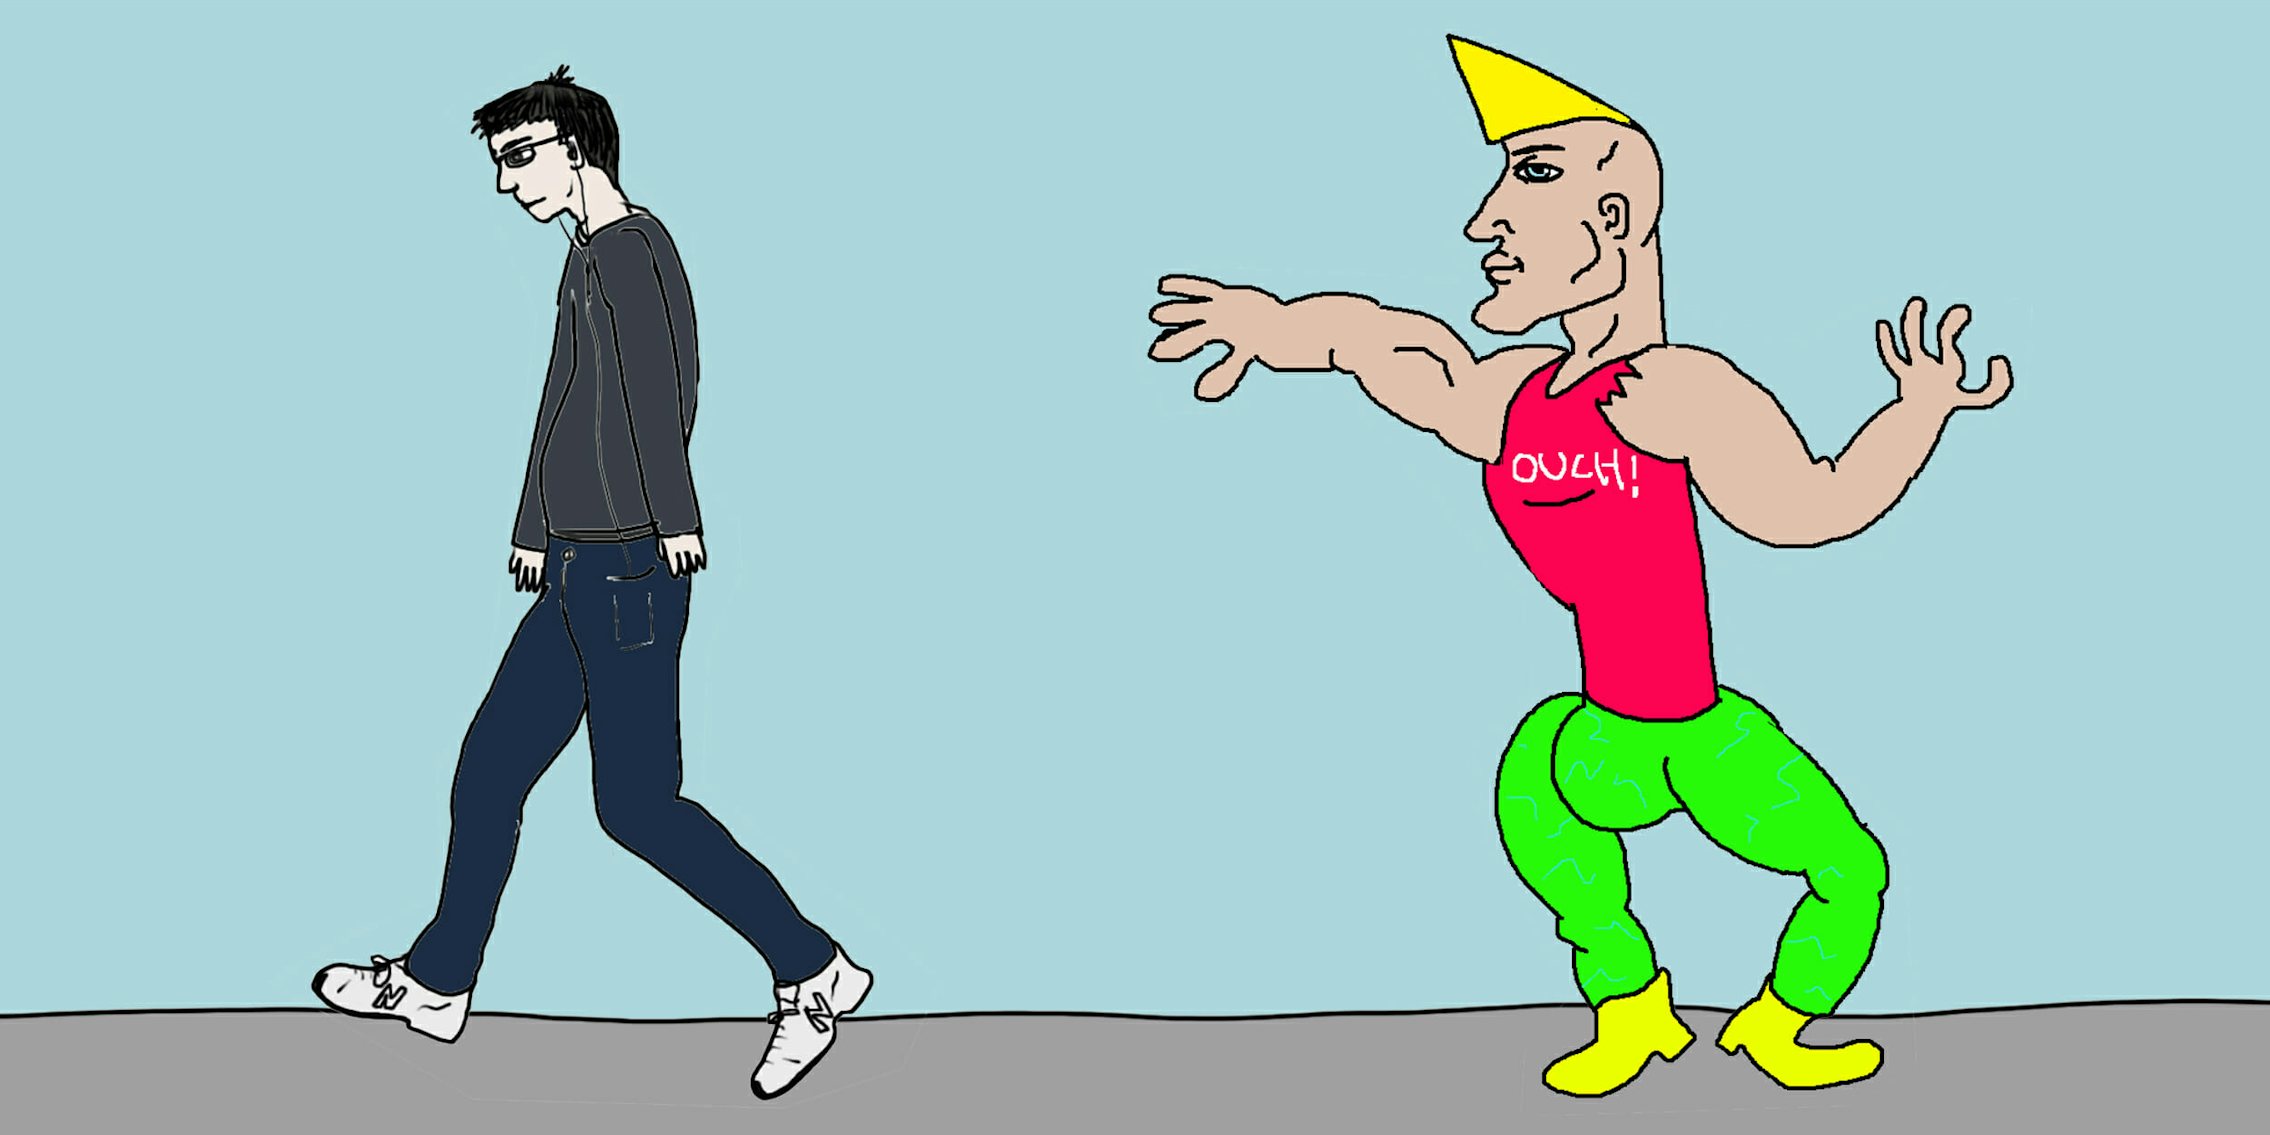 Virgin Walk vs. Chad Stride